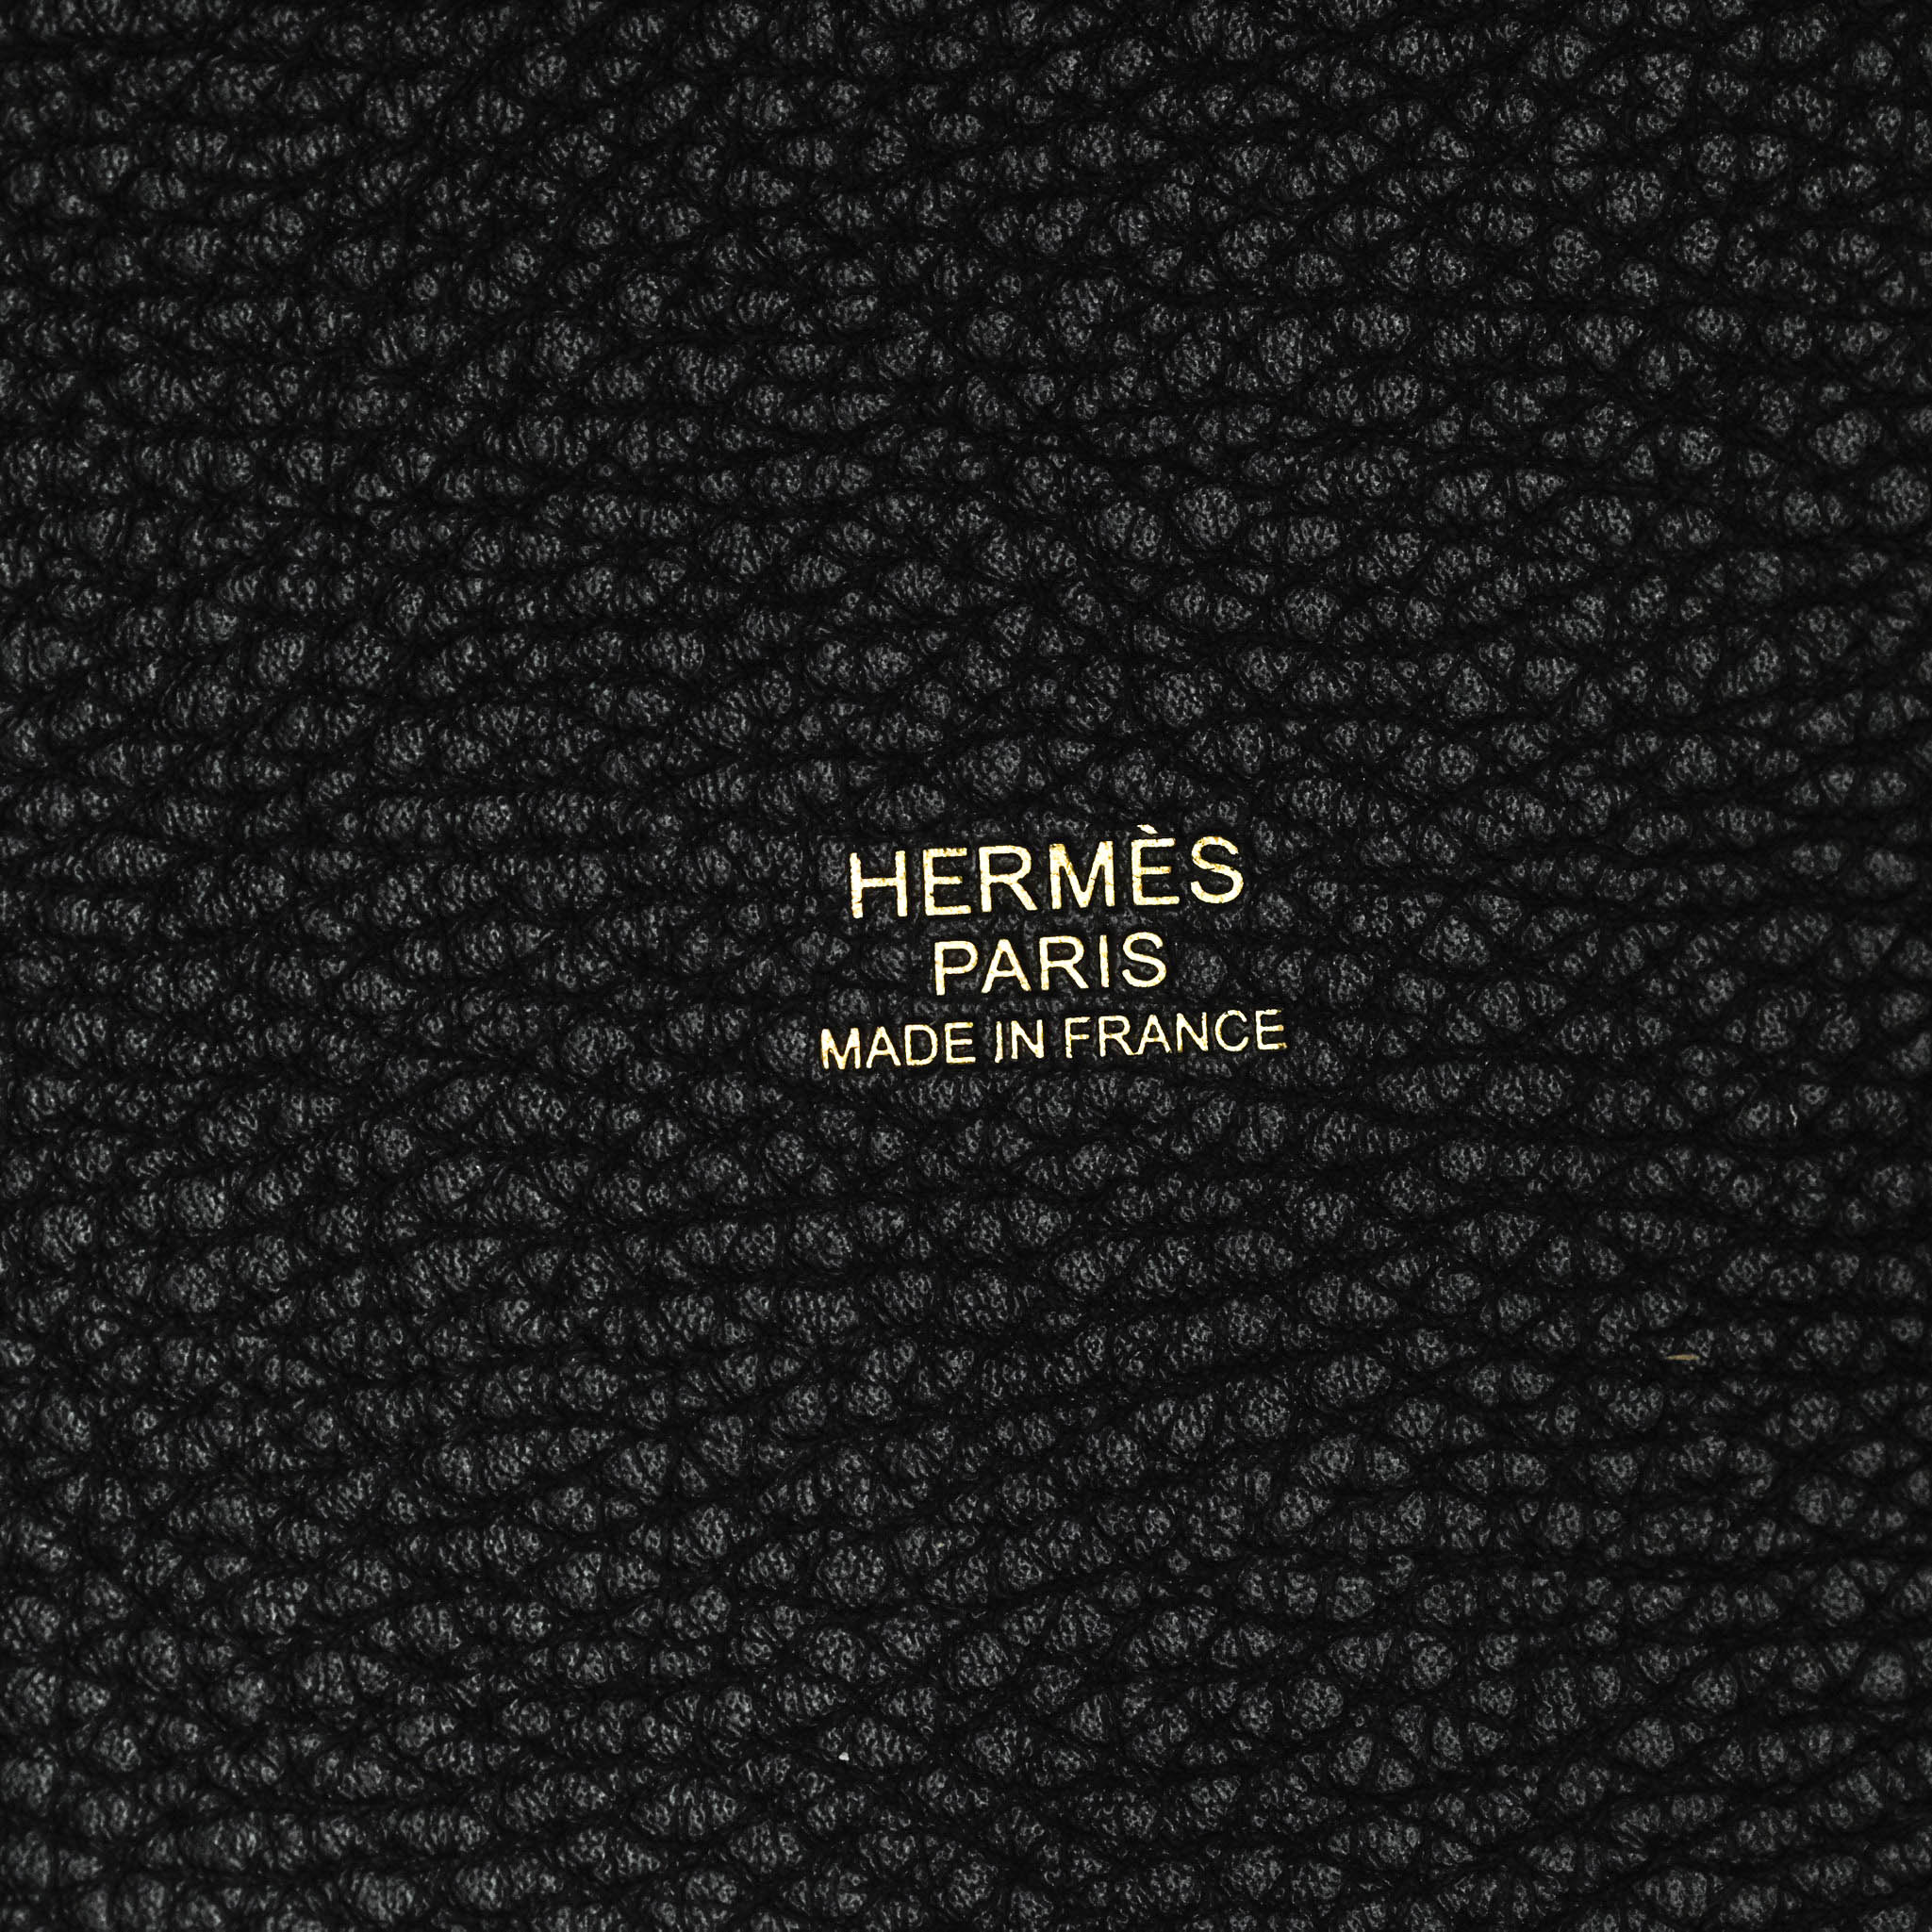 Picotin 18 Gold on Gold. 😁 Beautiful Wednesday everyone!! #hermes  #hermesbag #hermesorangebox #hermessandals #hermesbelt #hermescontance …